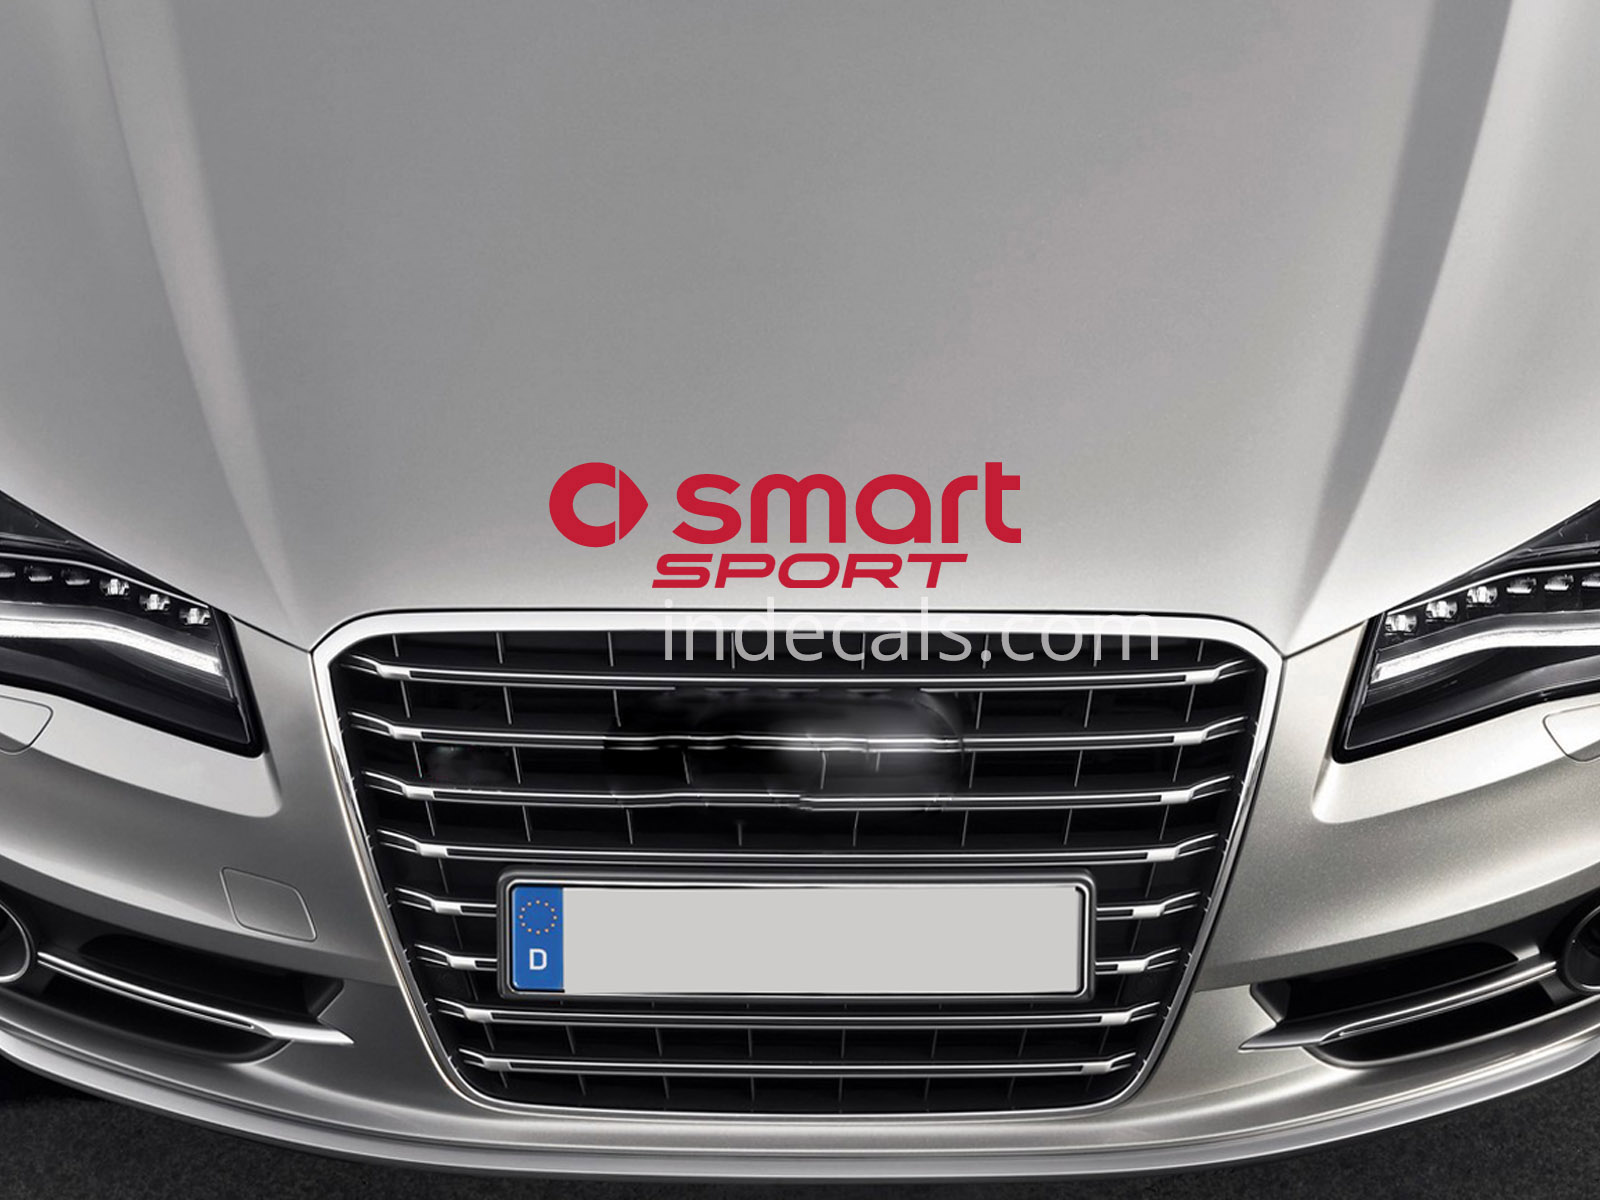 1 x Smart Performance Sticker for Bonnet - Red